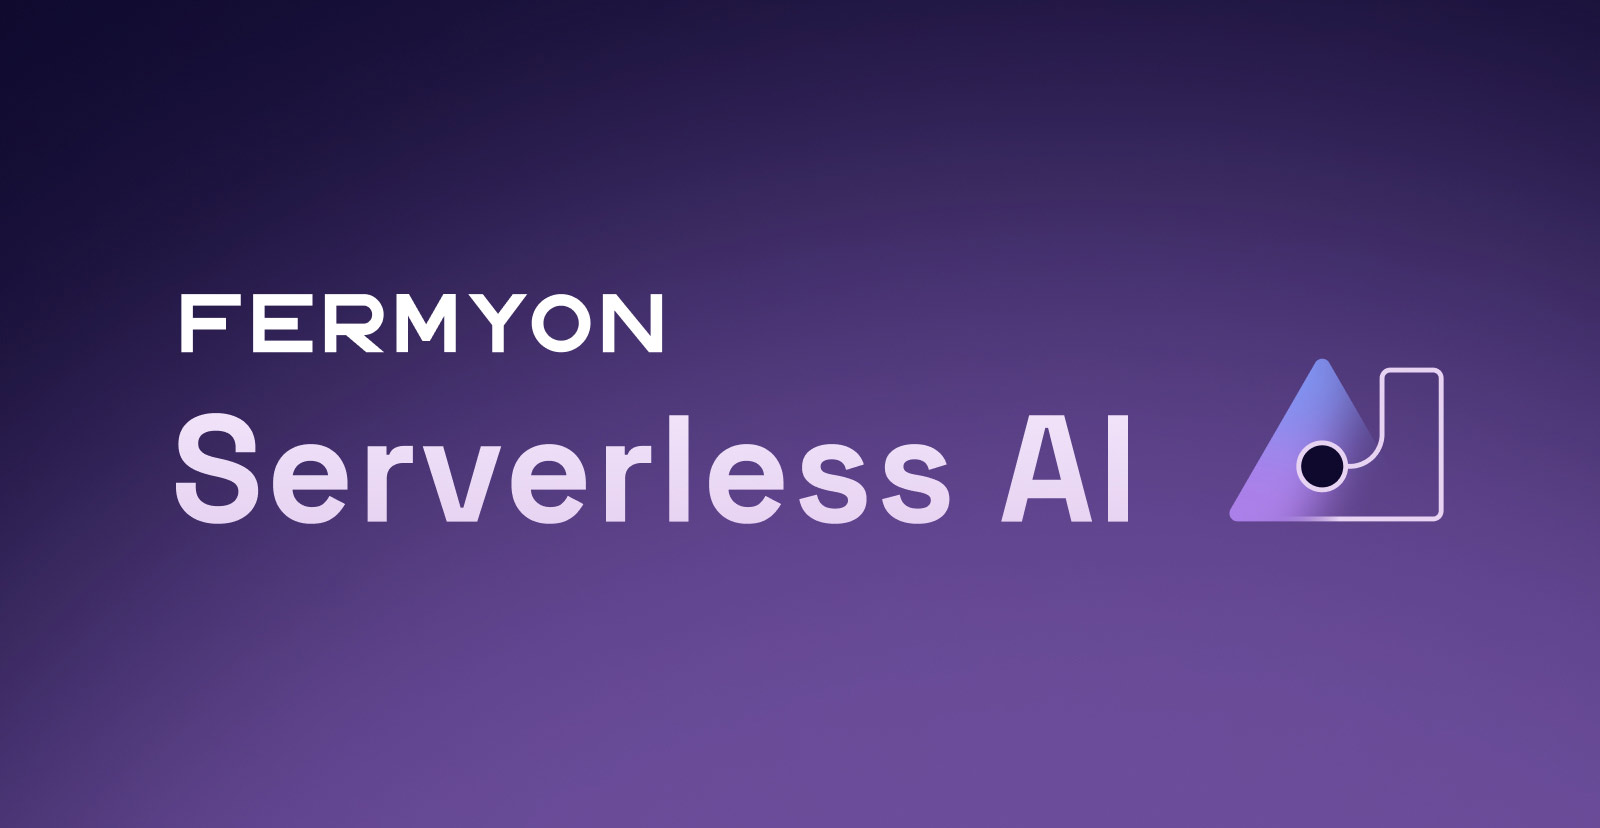 Introducing Fermyon Serverless AI